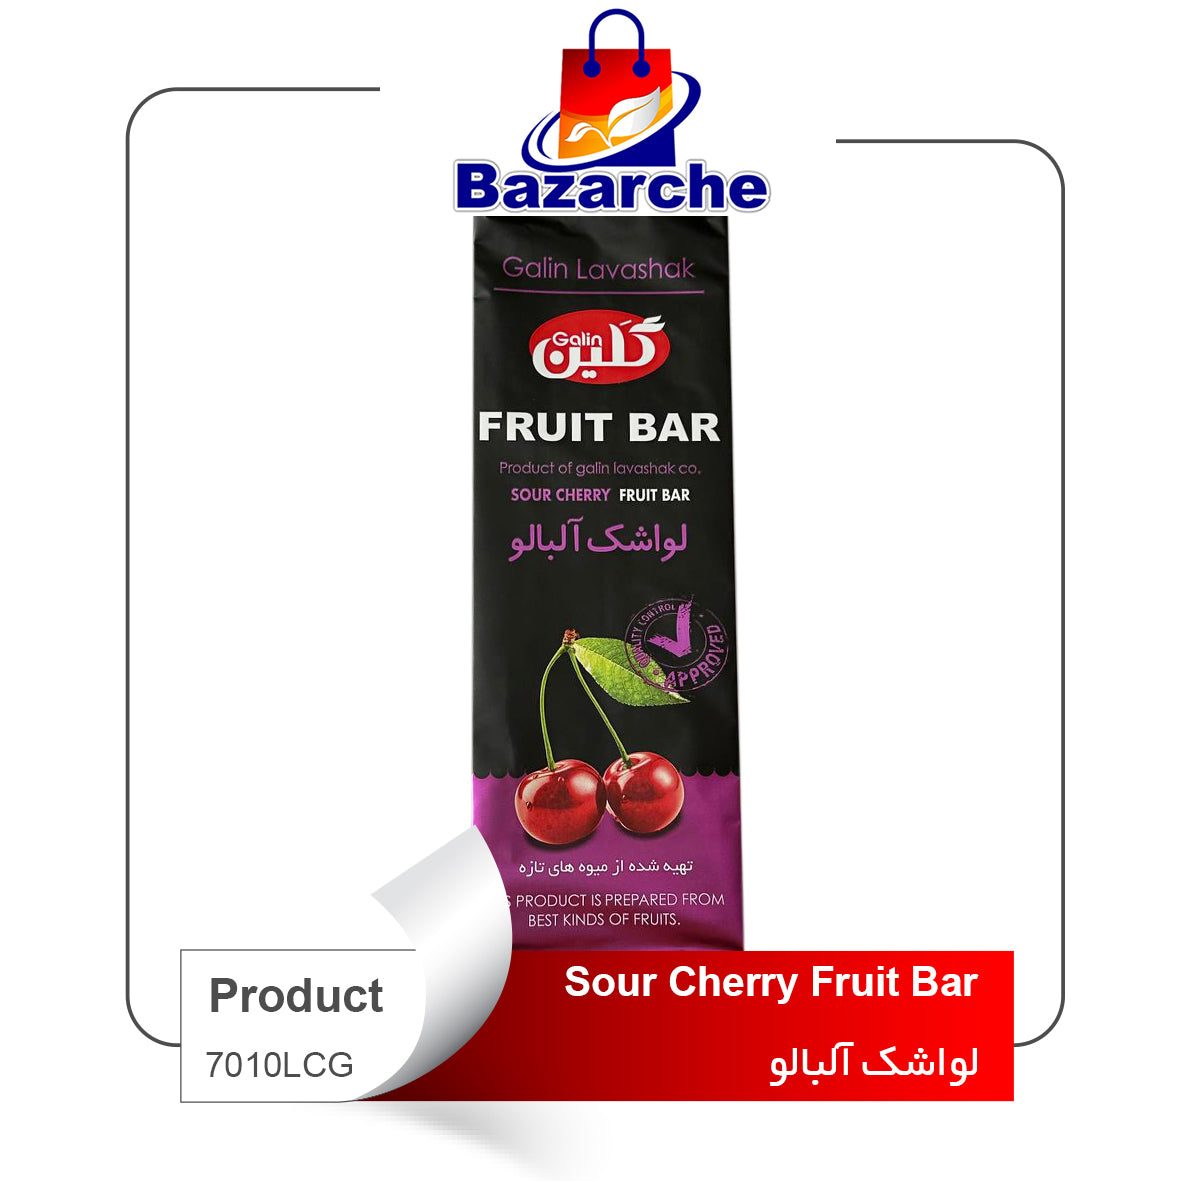 Sour Cherry Fruit Bar